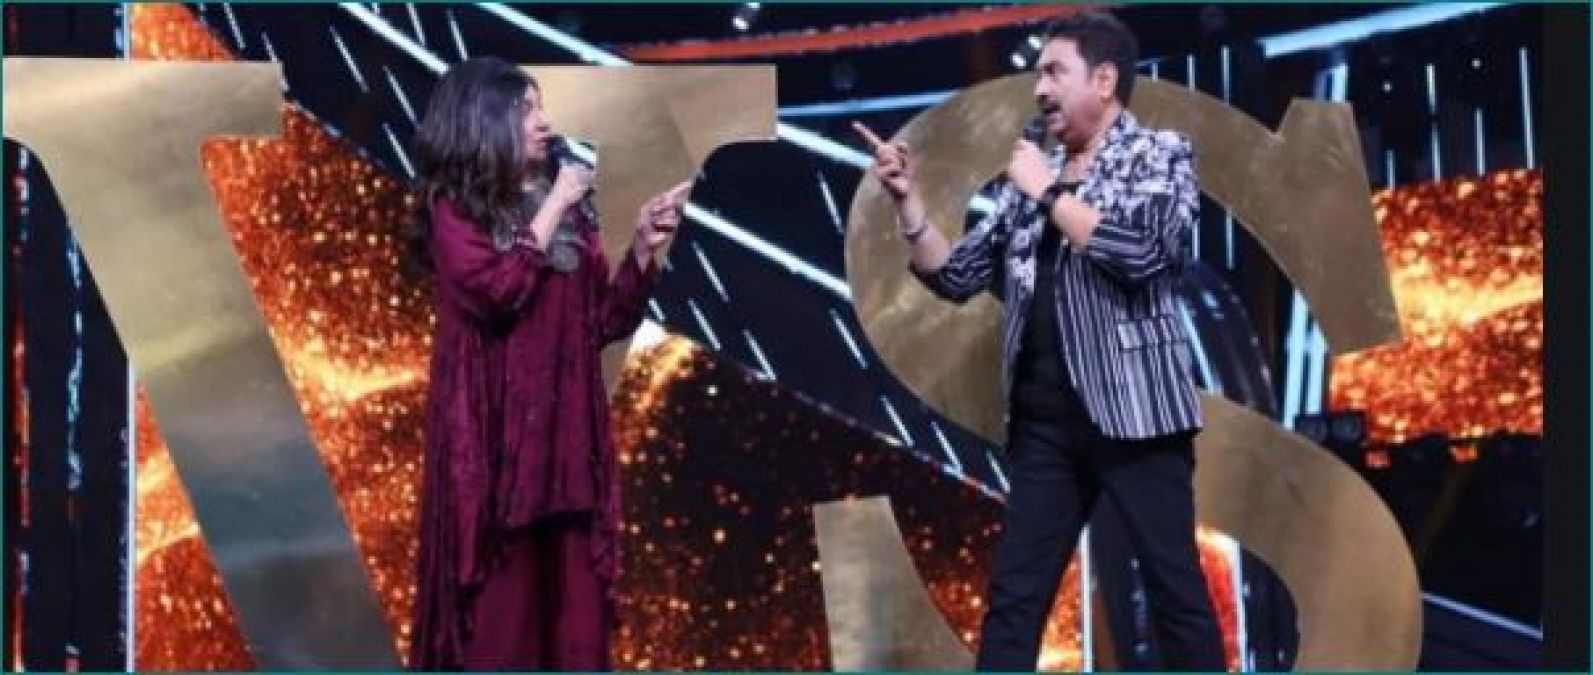 AR Rahman will be seen in 'Indian Idol 12' after Rekha